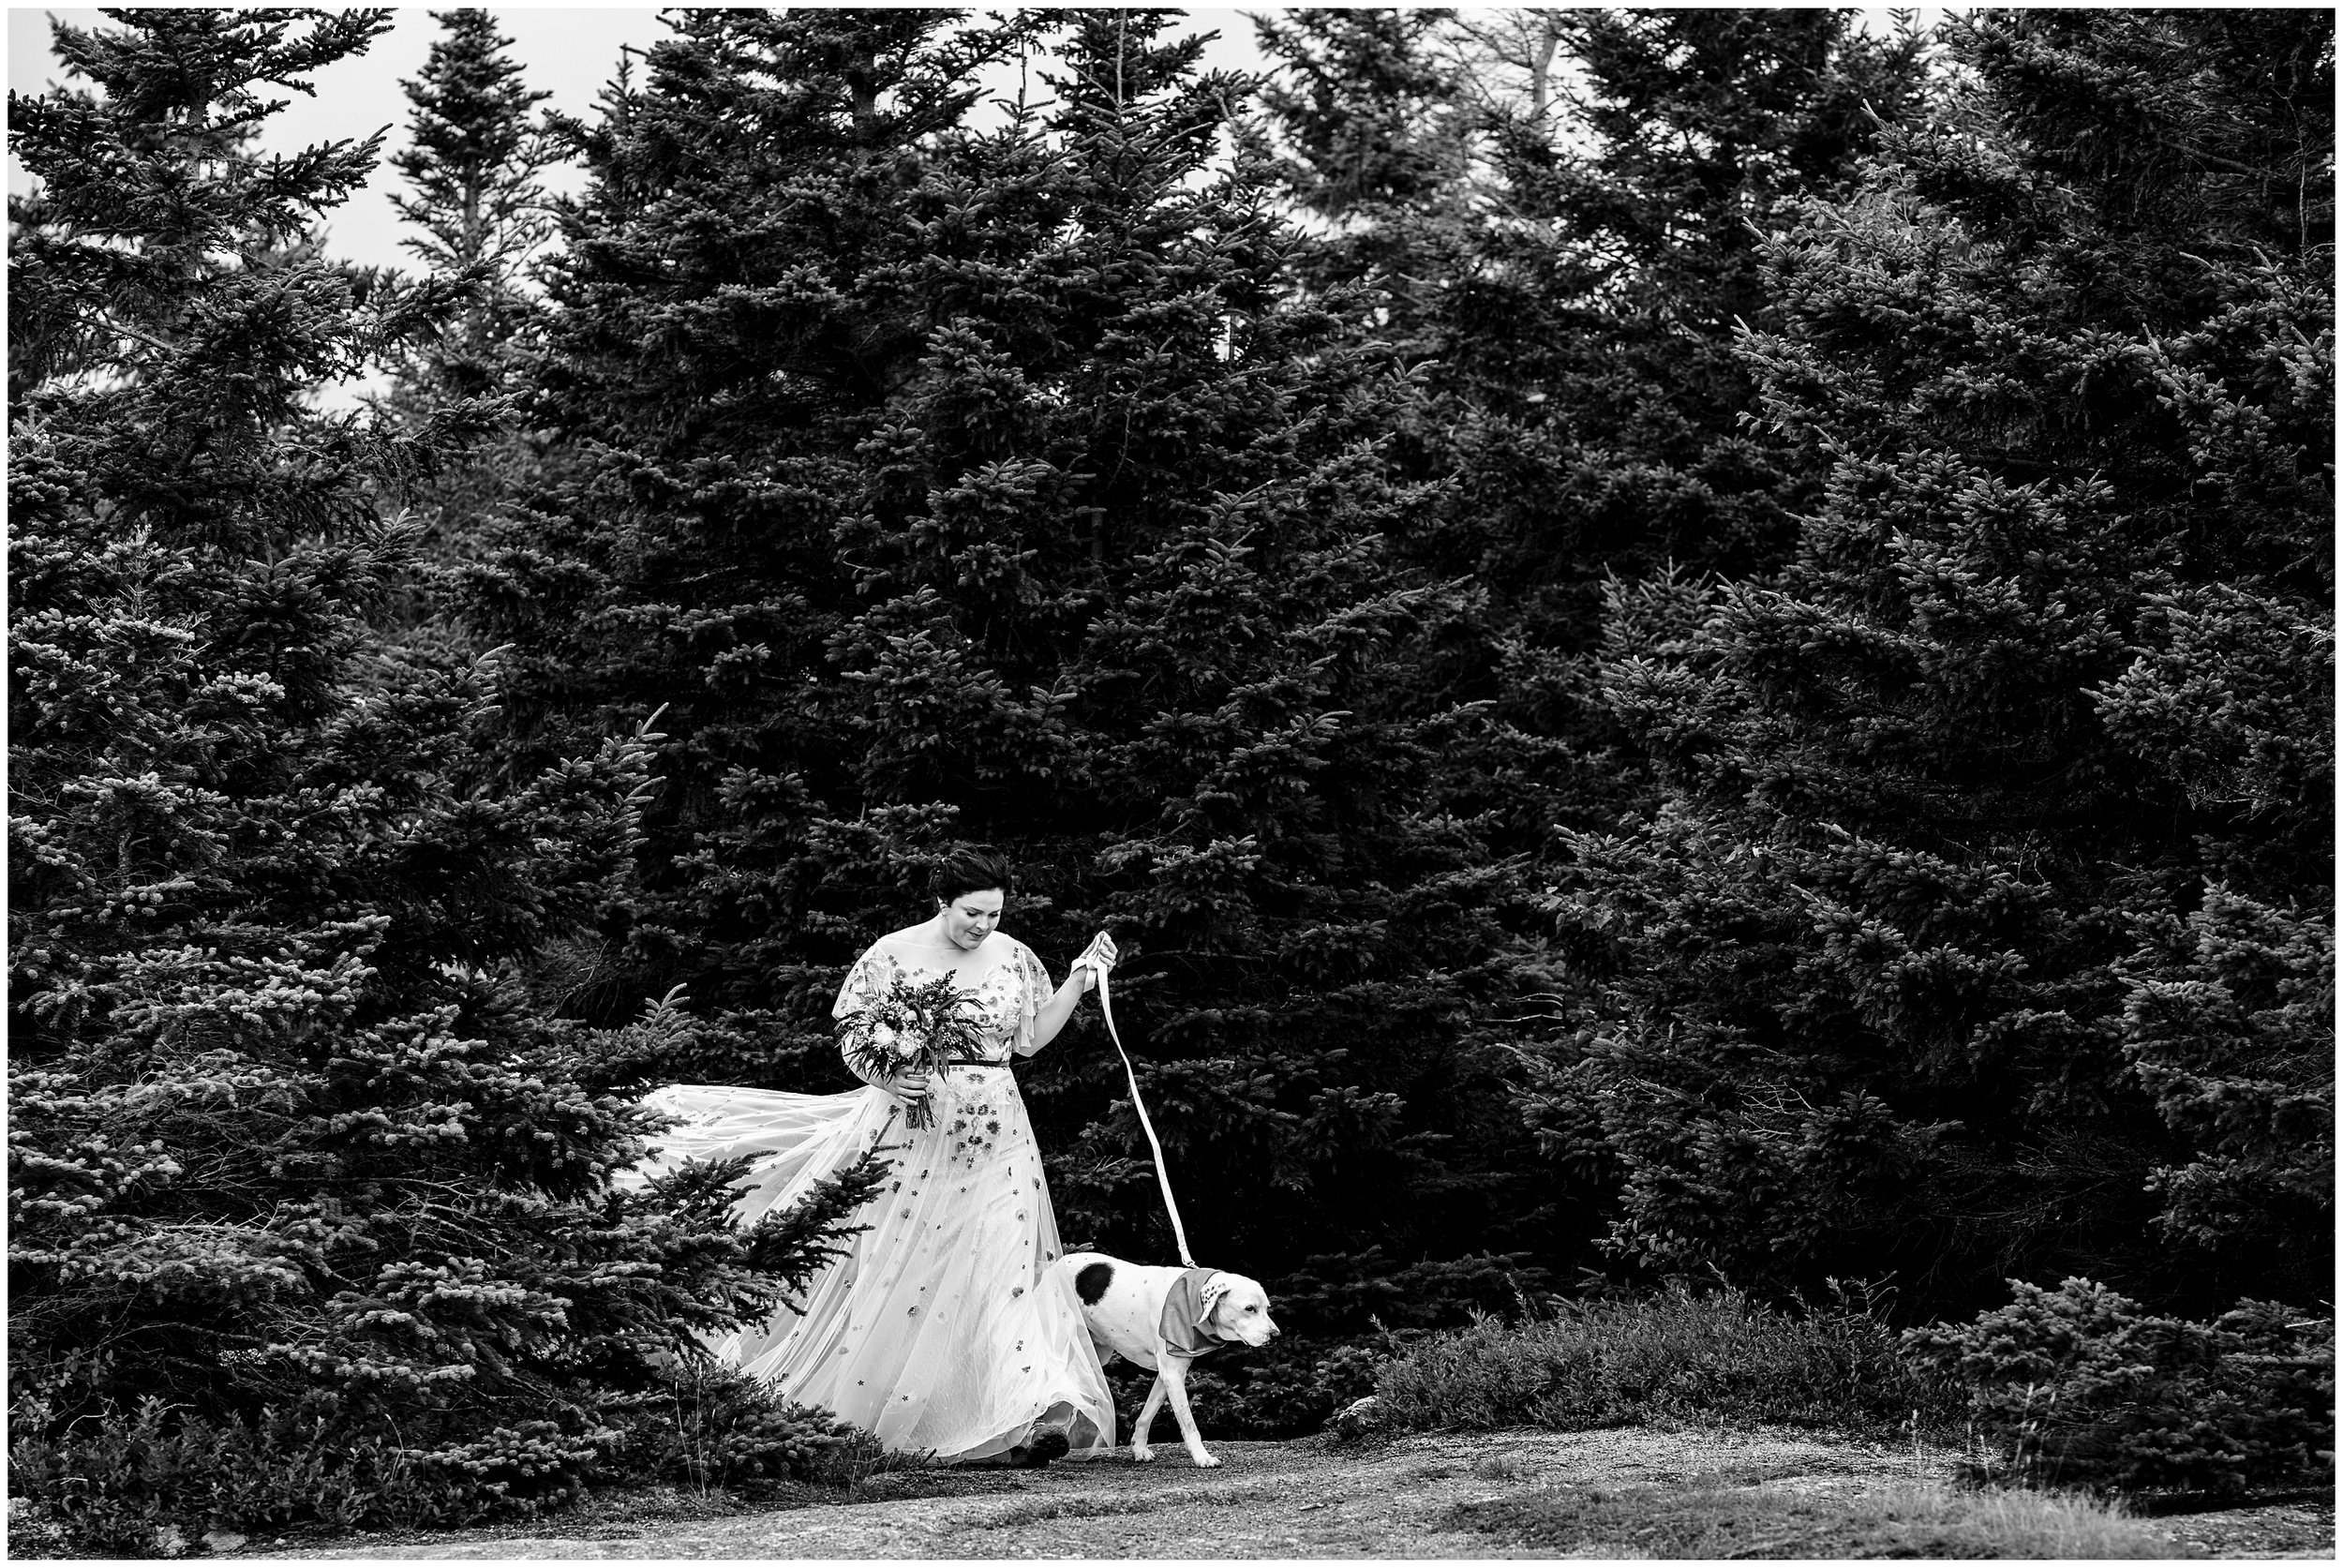 White Mountains Adventure Wedding Photographers, Hike Wedding Photographers, Two Adventurous Souls- 081723_0027.jpg